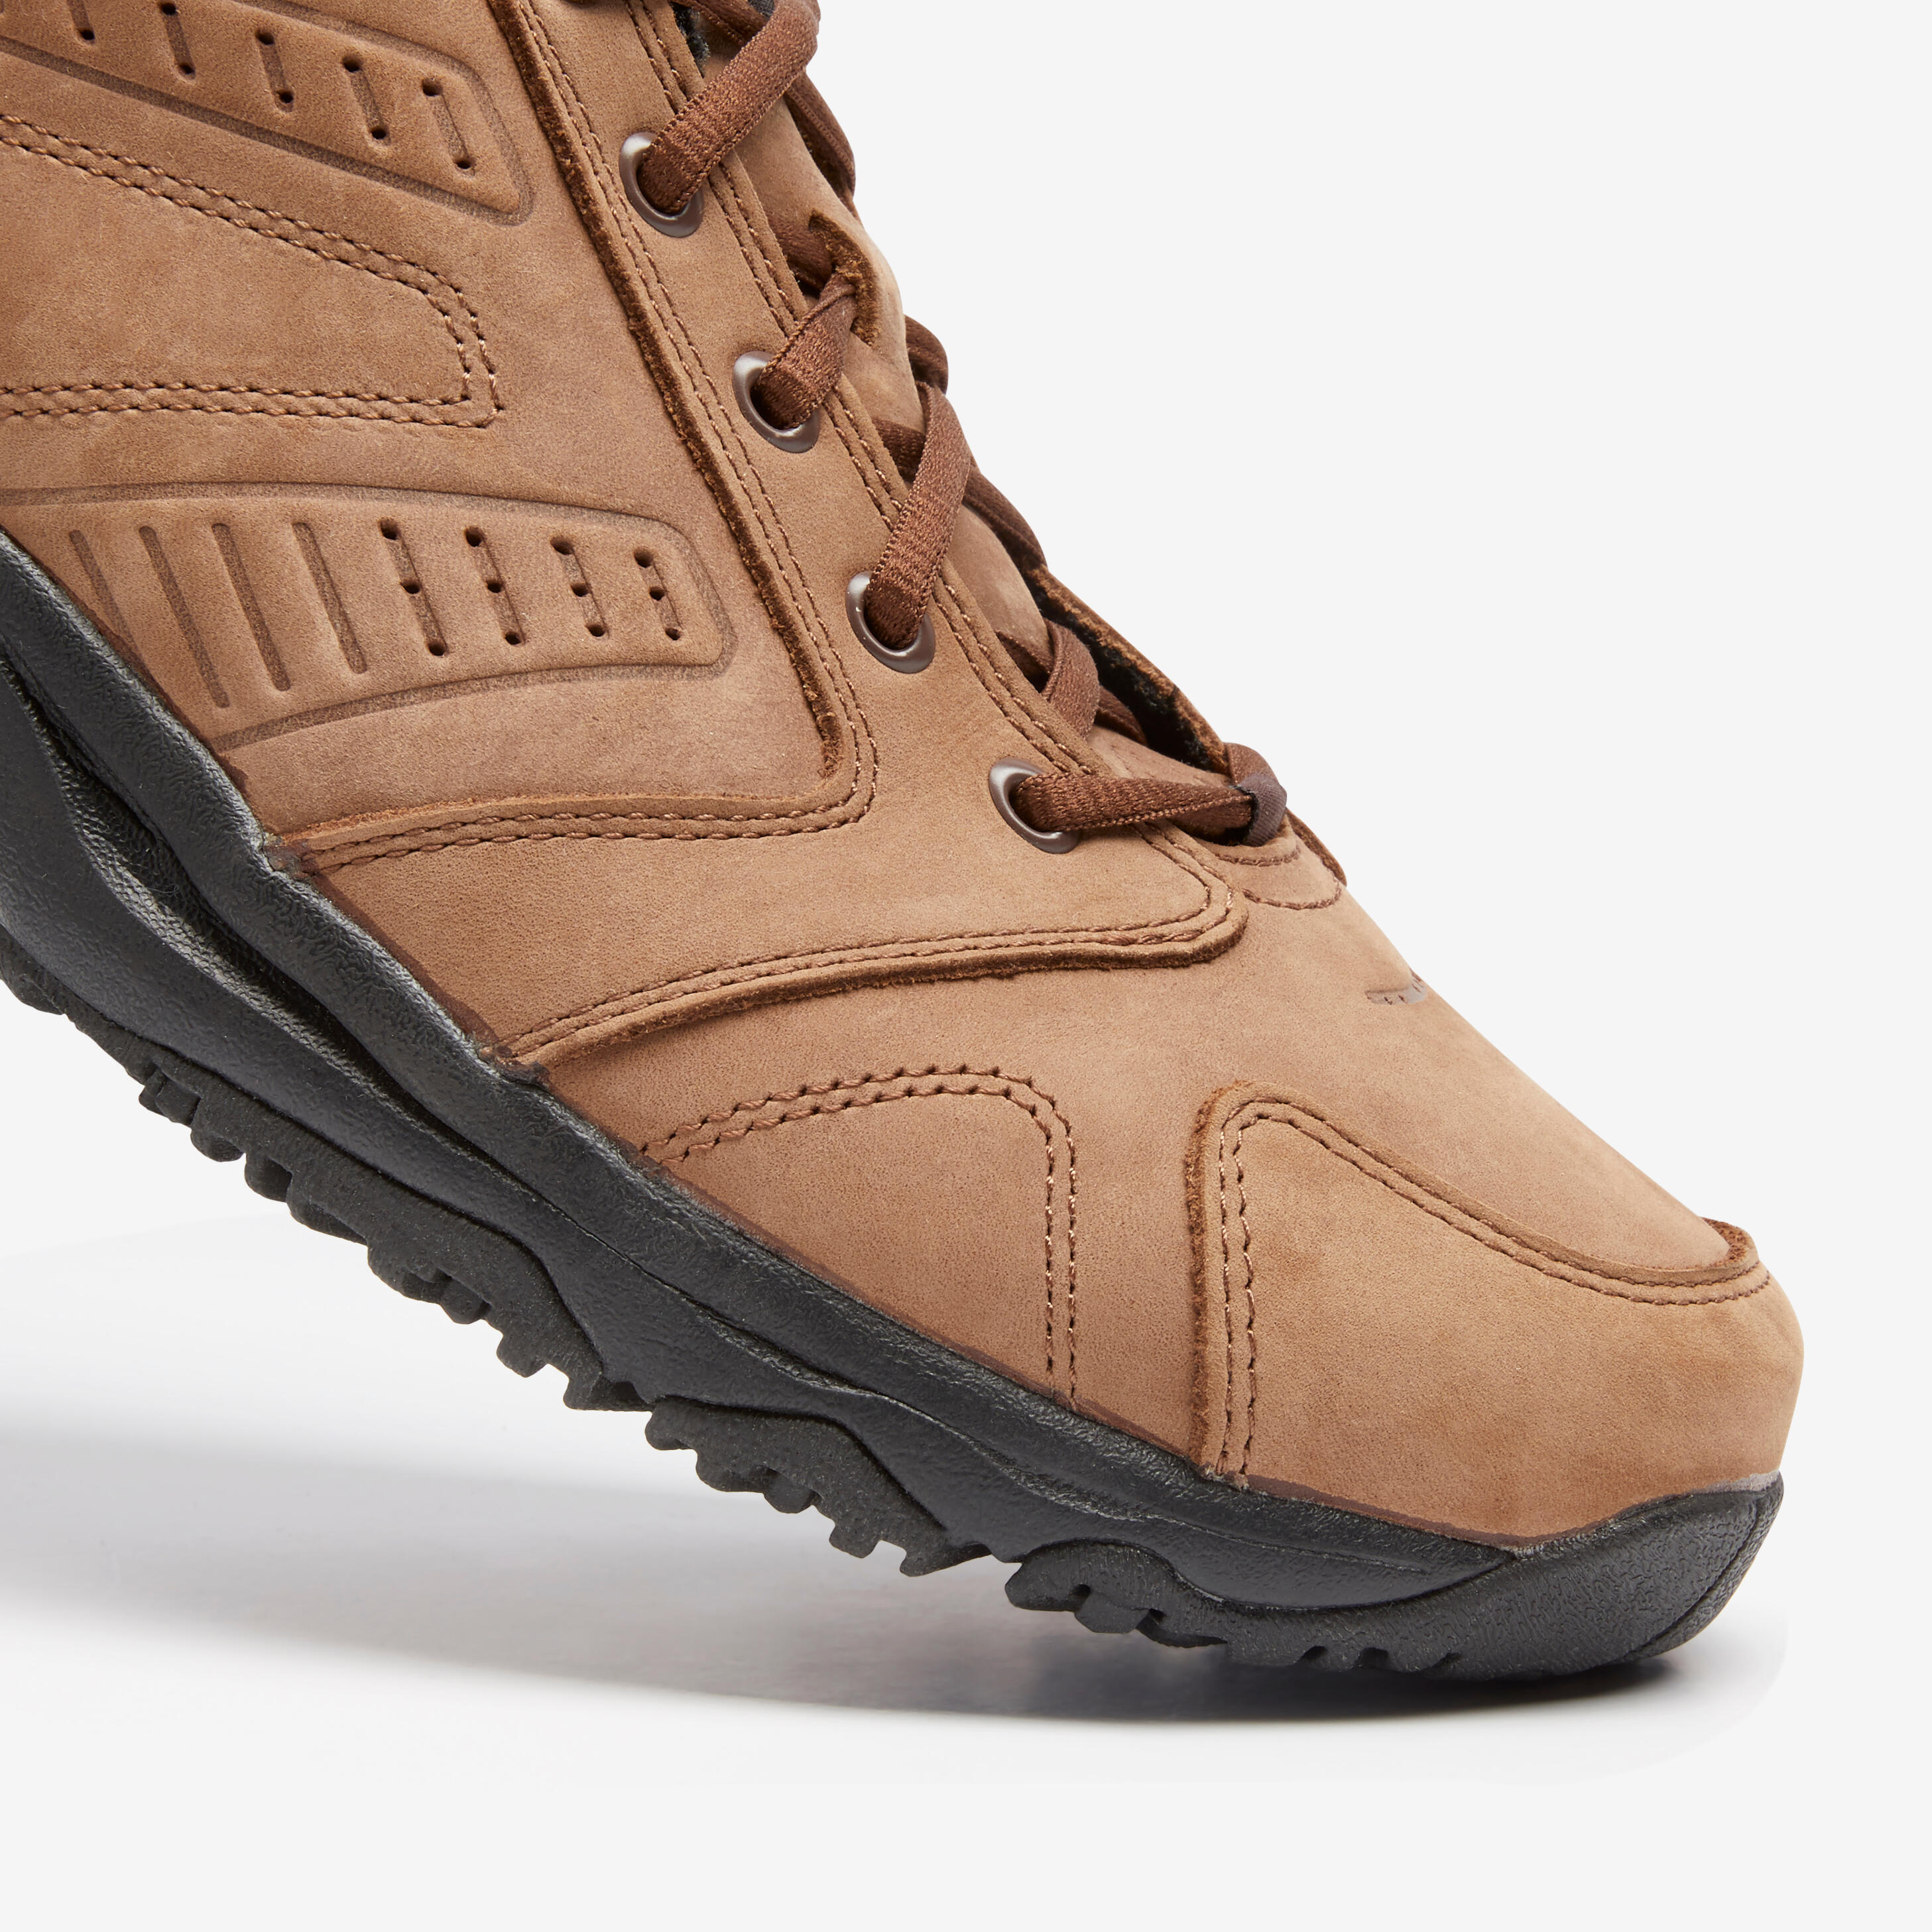 Nakuru Comfort Men's Urban Walking Leather Shoes - brown 4/8